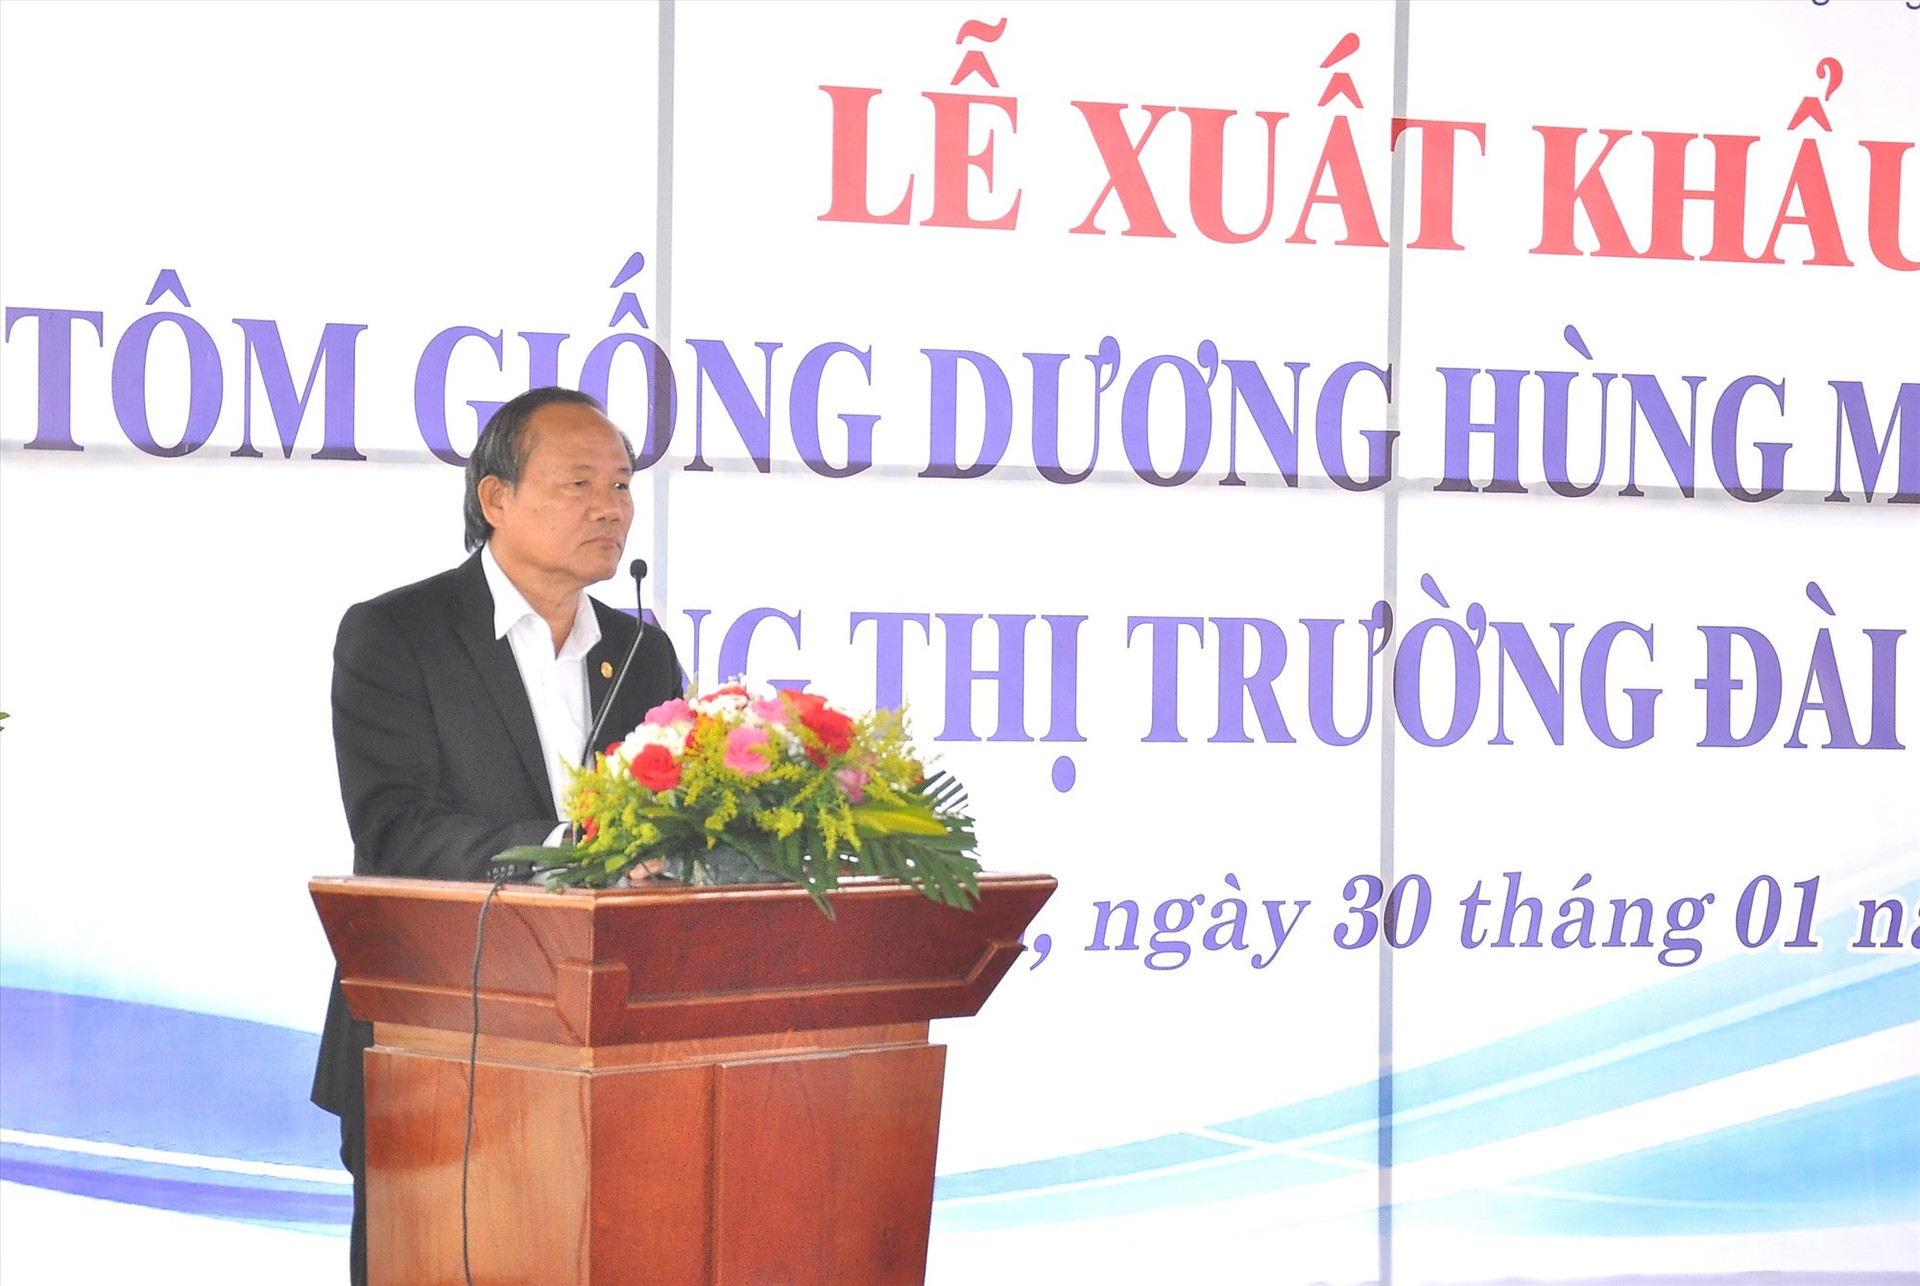 Pham Viet Tich at the ceremony